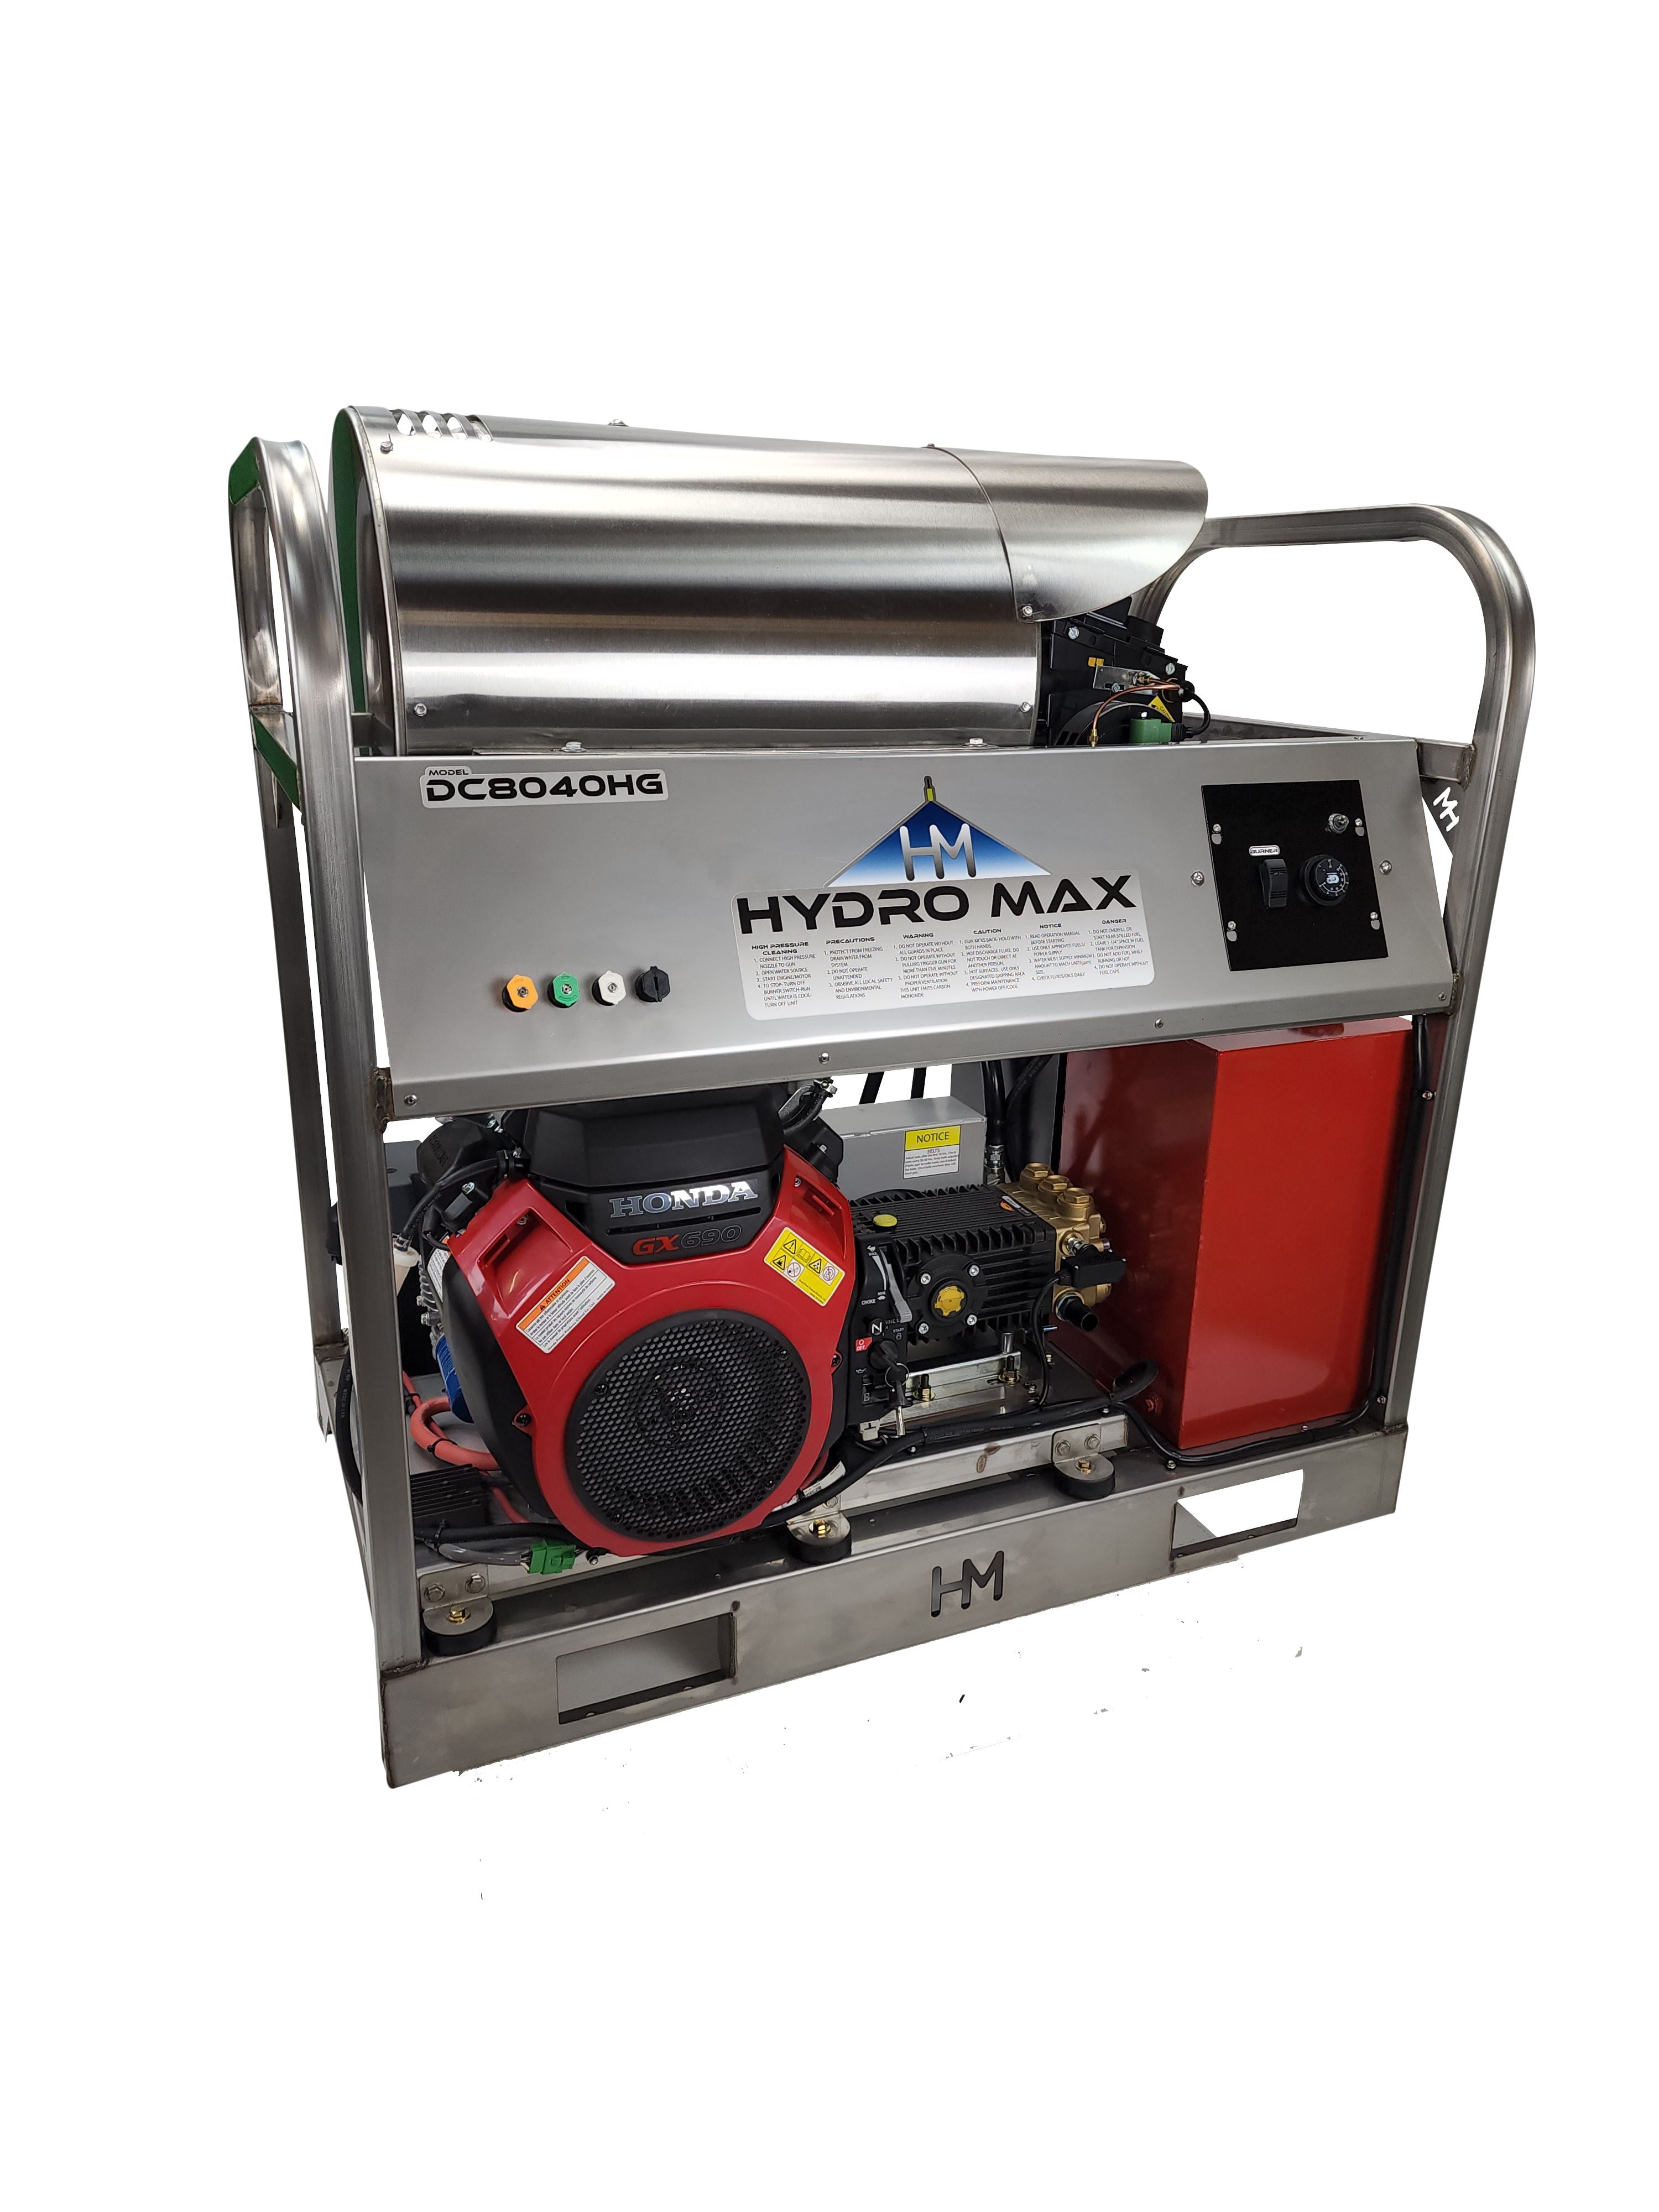 Hydro Max DC6040HG- 6gpm @ 4000psi- Belt Drive Pressure Washer Hydro Max 